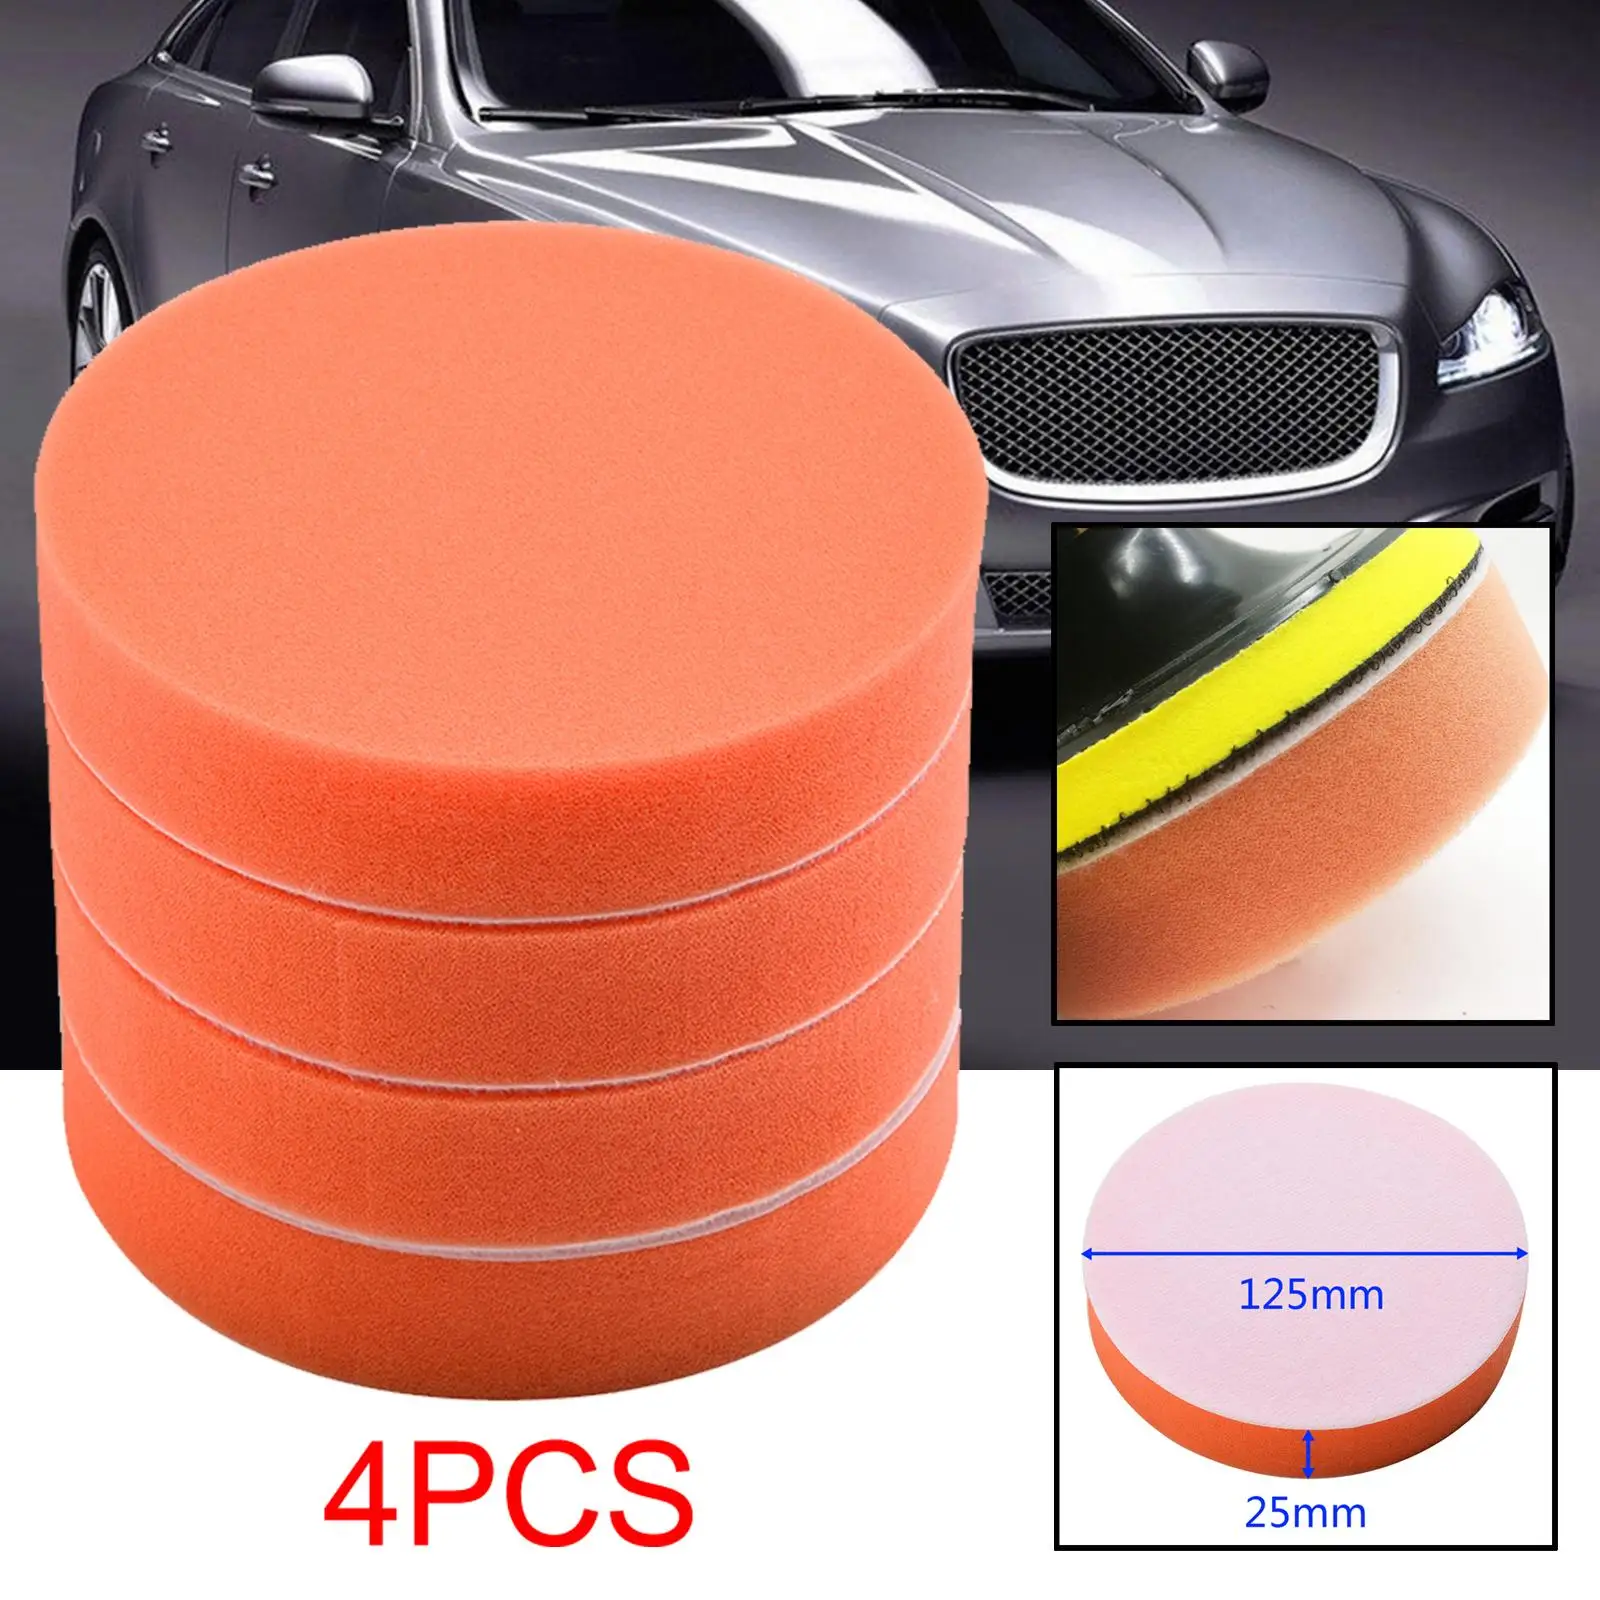 4Pcs Polishing Pads Reusable Enhances High Gloss Buffing Sponge for Glass Ceramic Accessories